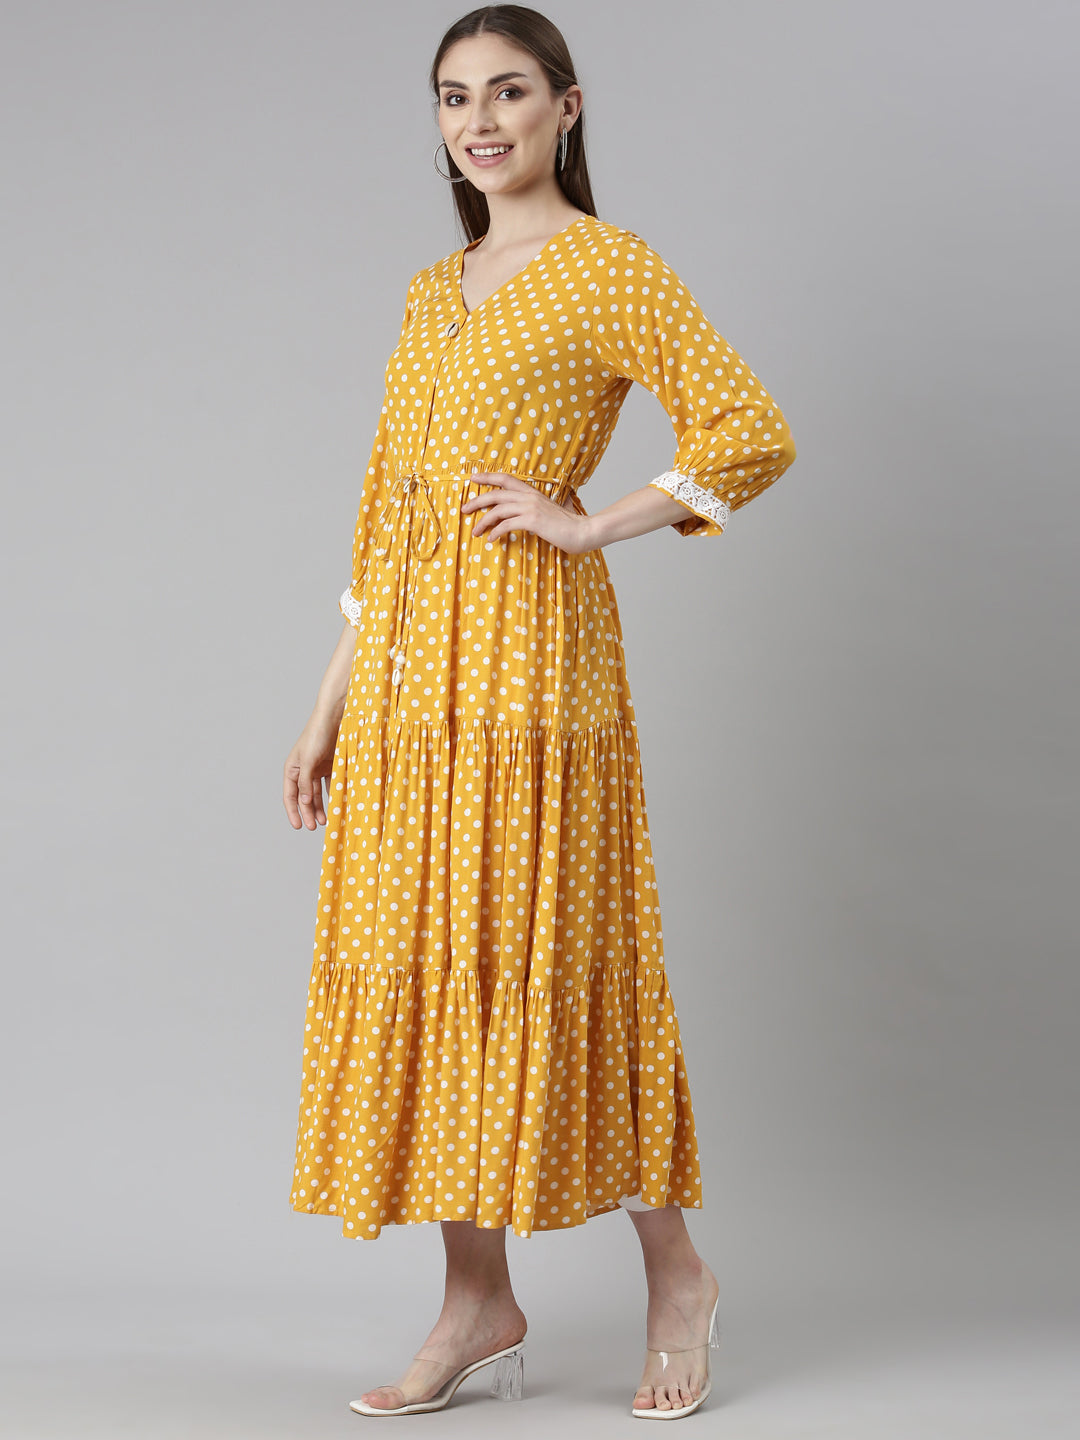 Neeru's Mustard Straight Casual Polka Dots Dresses